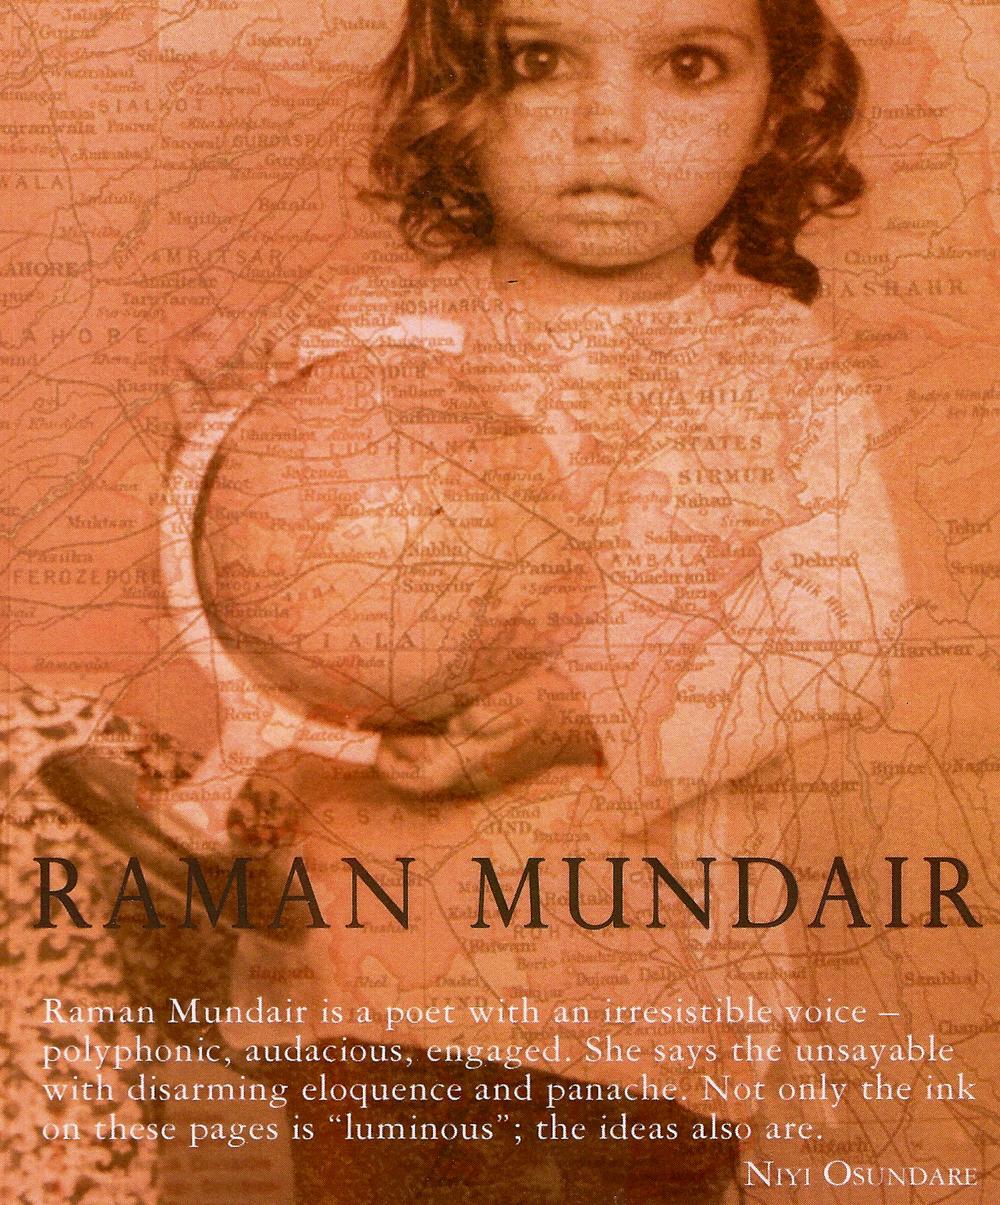 A Choreographer's Cartography by Raman Mundair front cover